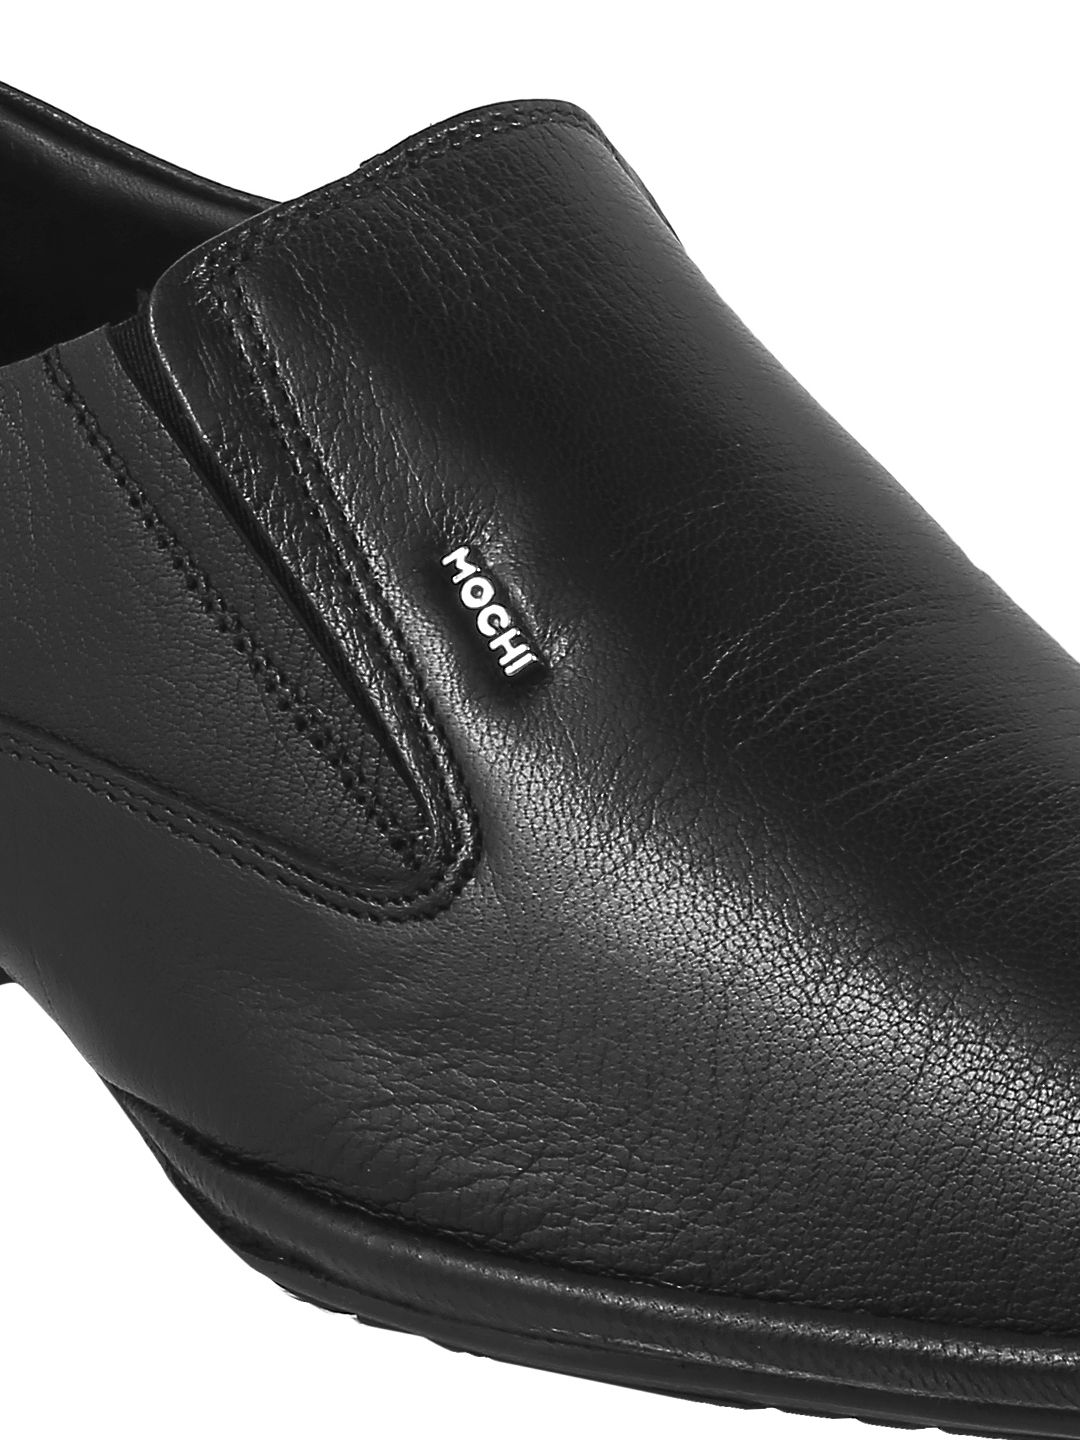 mochi men's leather formal shoes